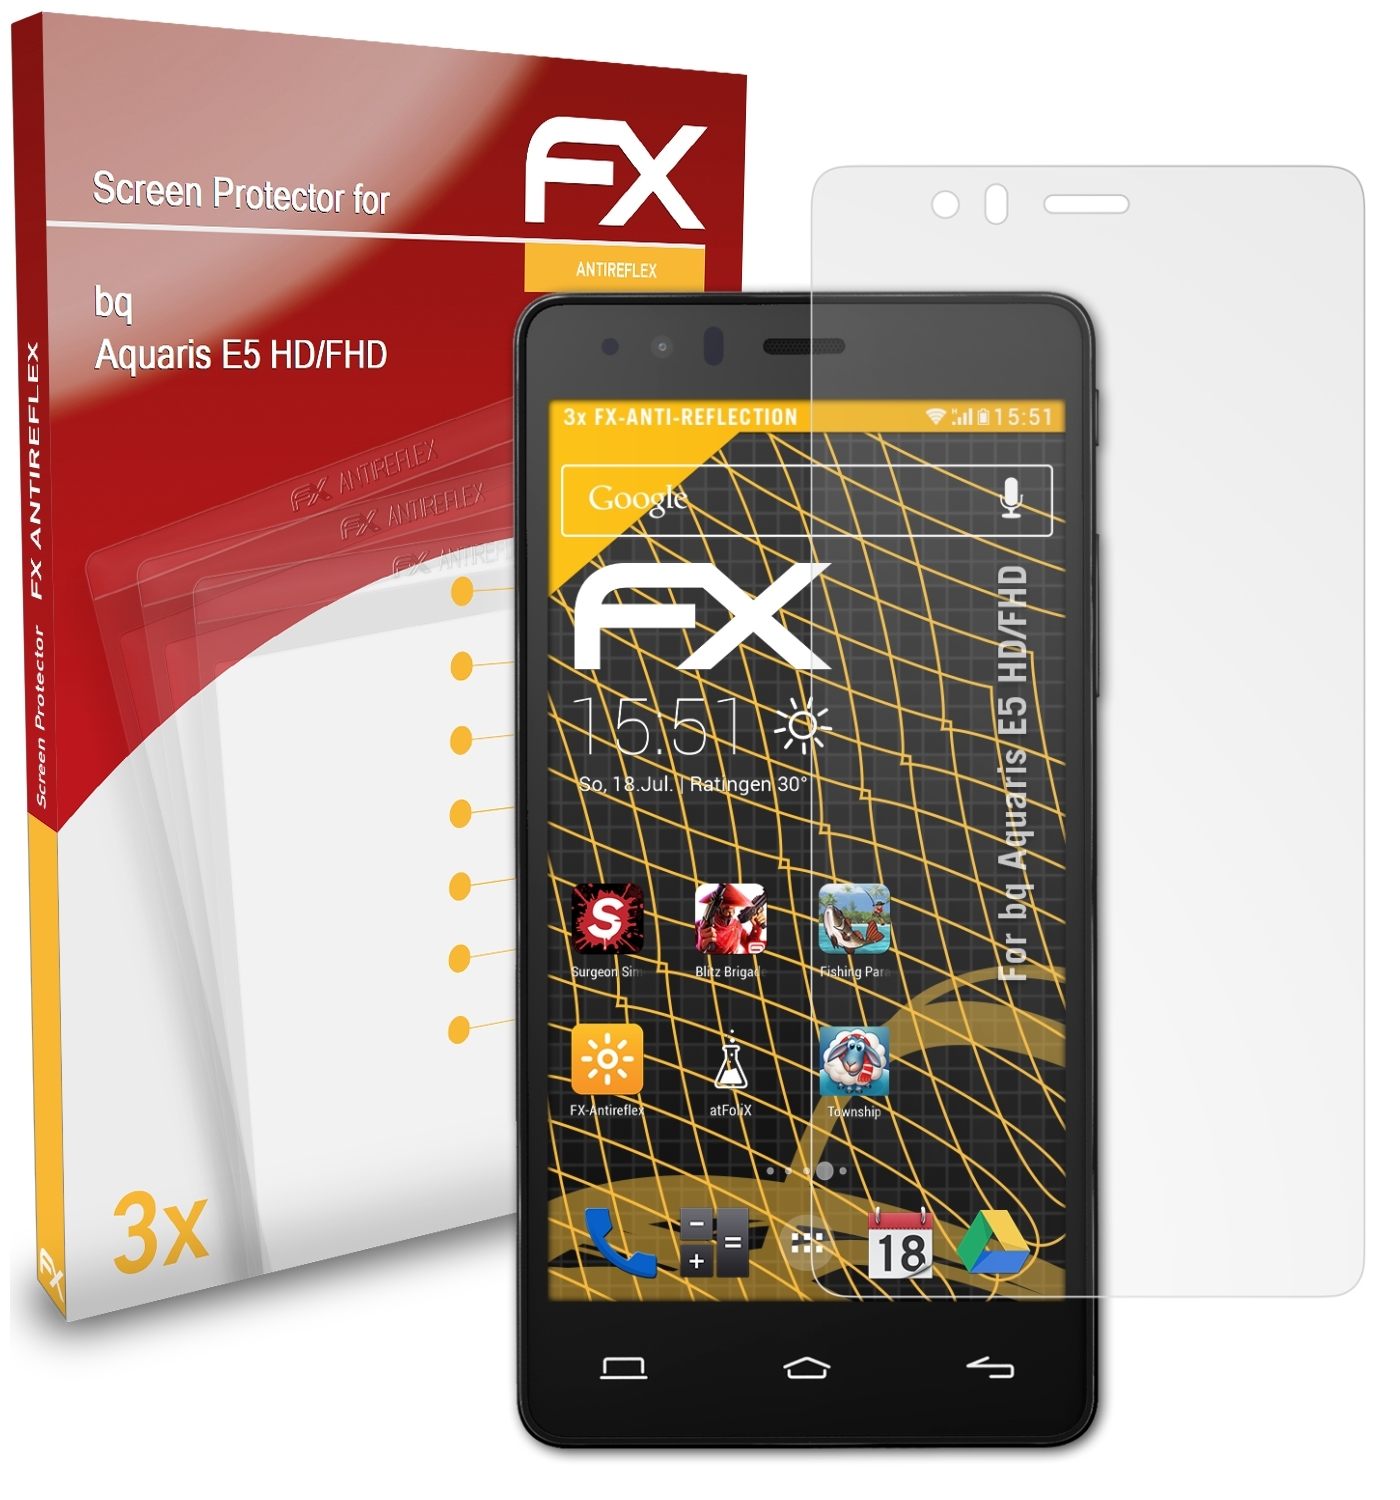 ATFOLIX 3x FX-Antireflex HD/FHD) E5 Aquaris bq Displayschutz(für